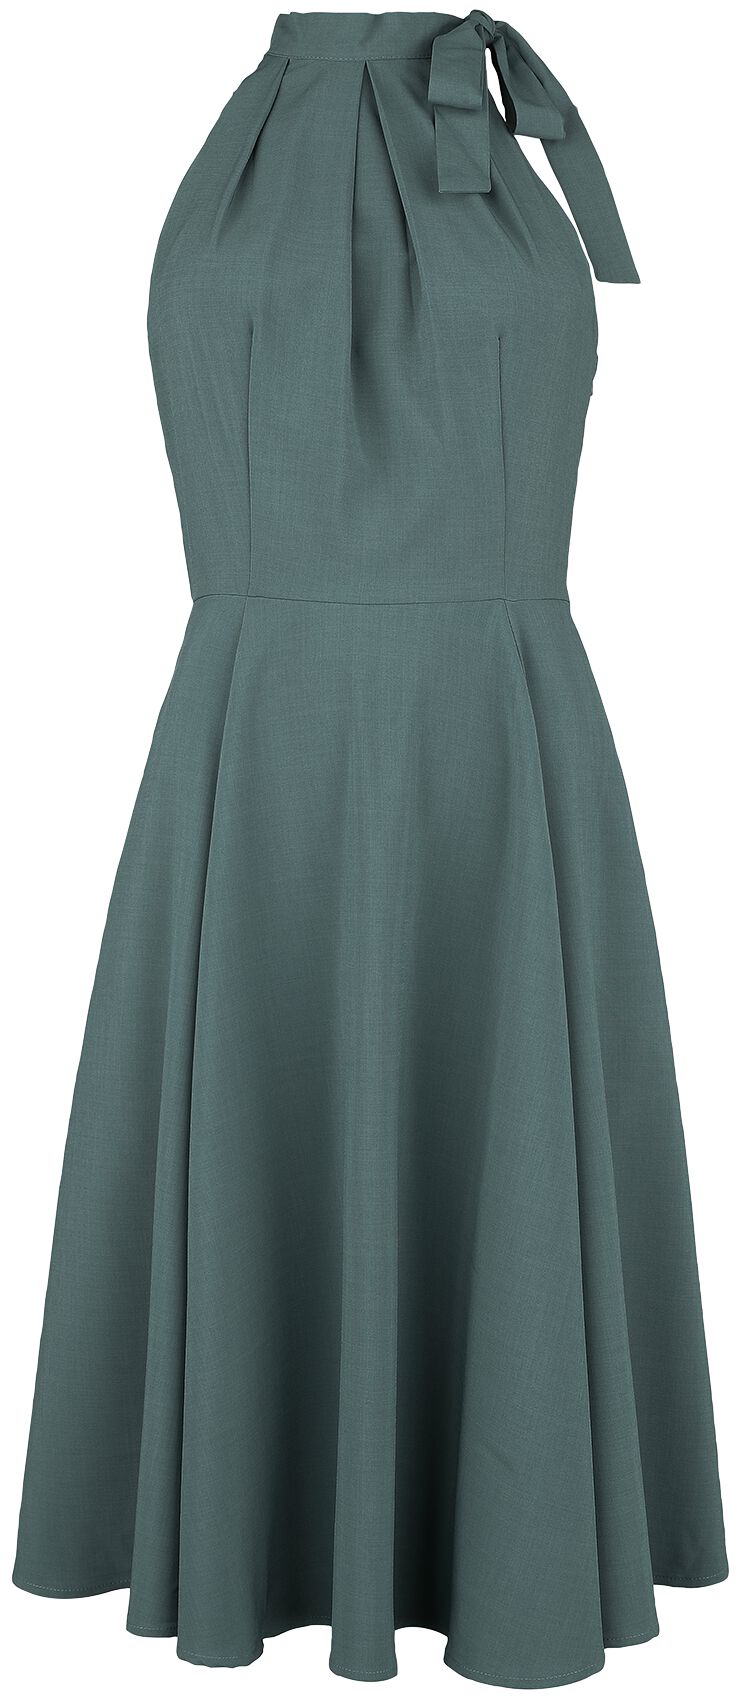 H&R London - Rockabilly Kleid knielang - Kira Swing Dress - XS bis XXL - für Damen - Größe XXL - grün